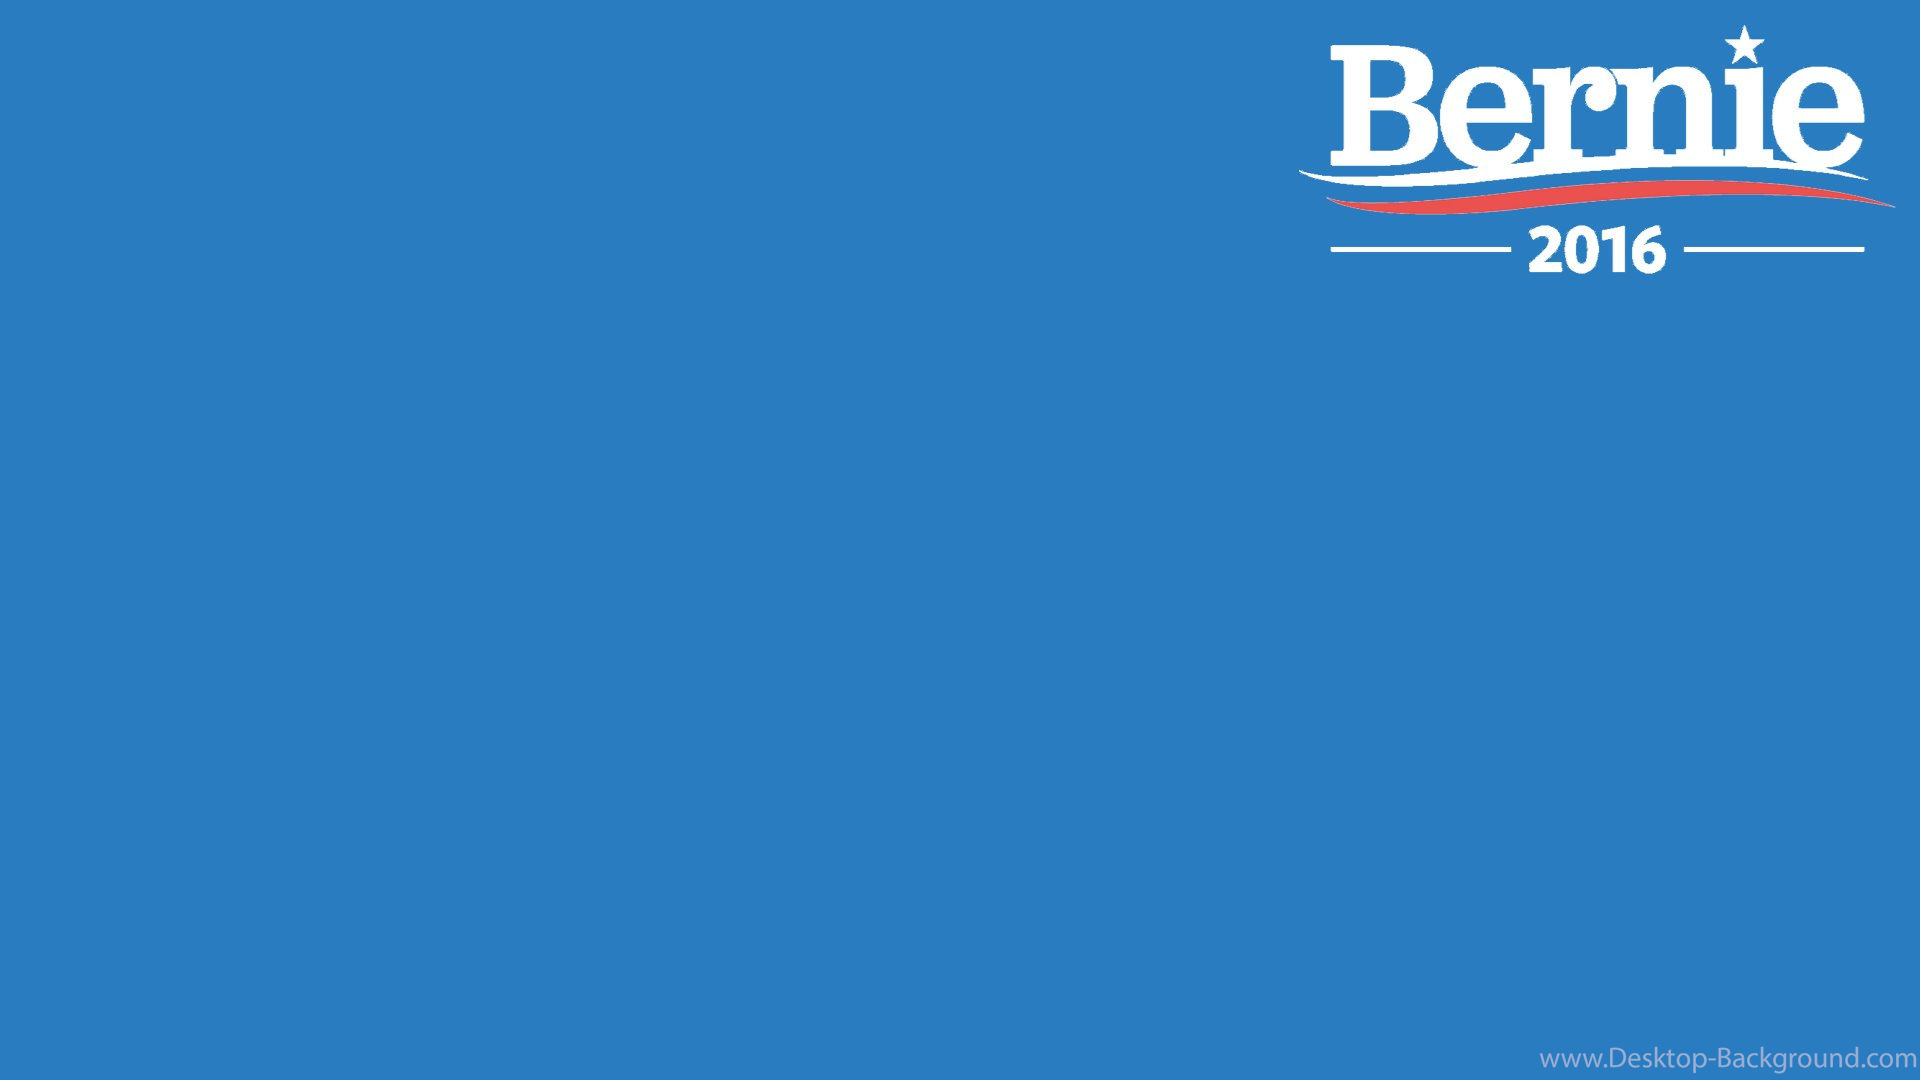 Popular - Bernie Sanders Presidential Campaign, 2016 , HD Wallpaper & Backgrounds